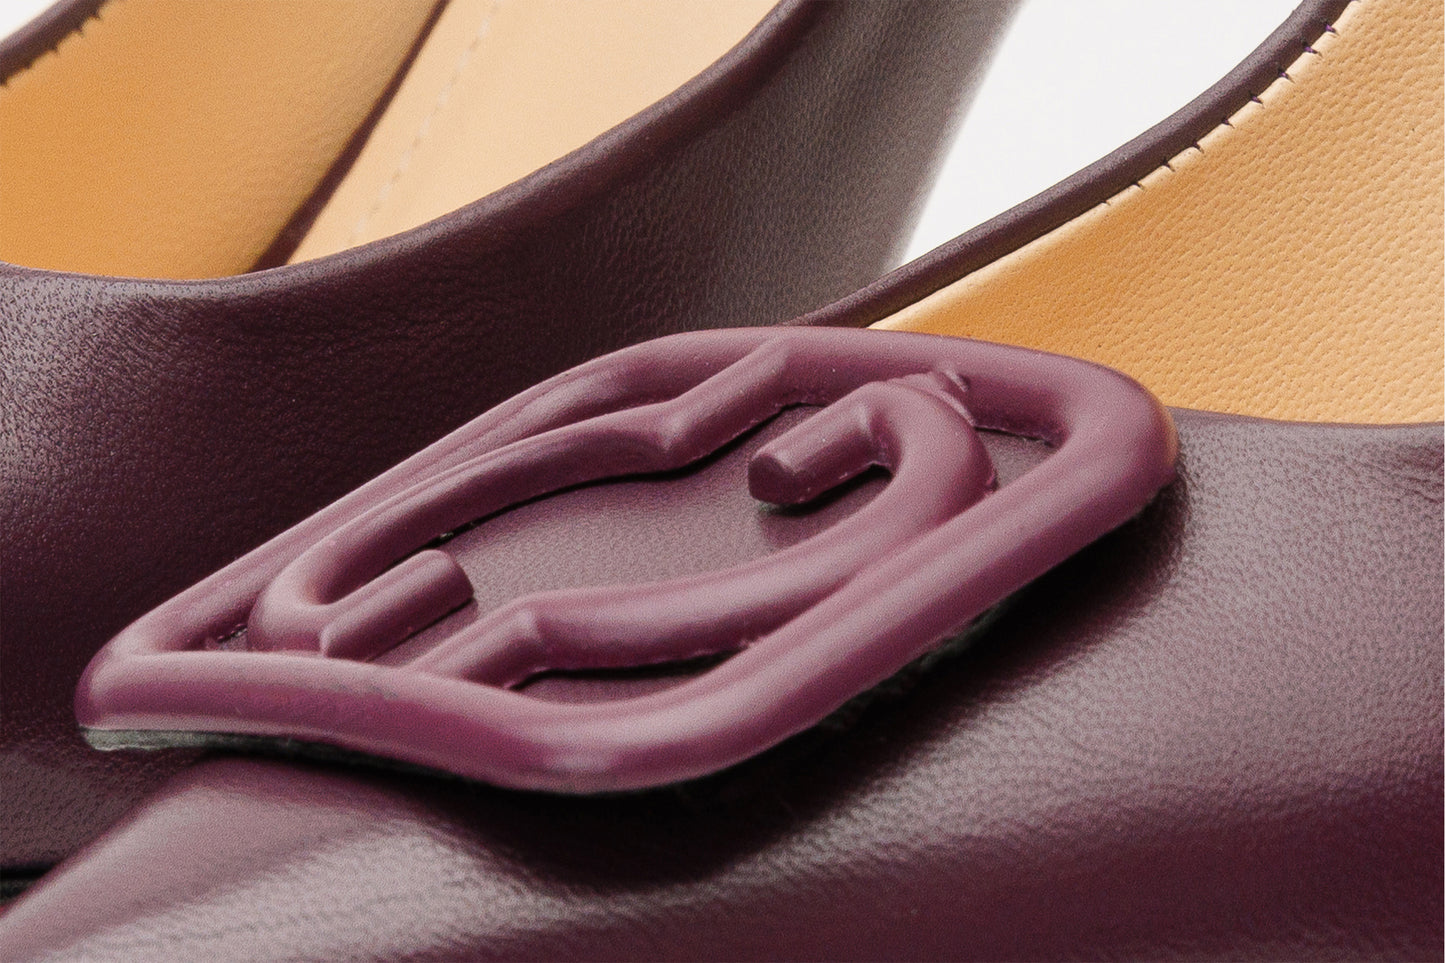 The Maneadero Dark Purple Leather Pump Fuchsia Sole Women Shoe